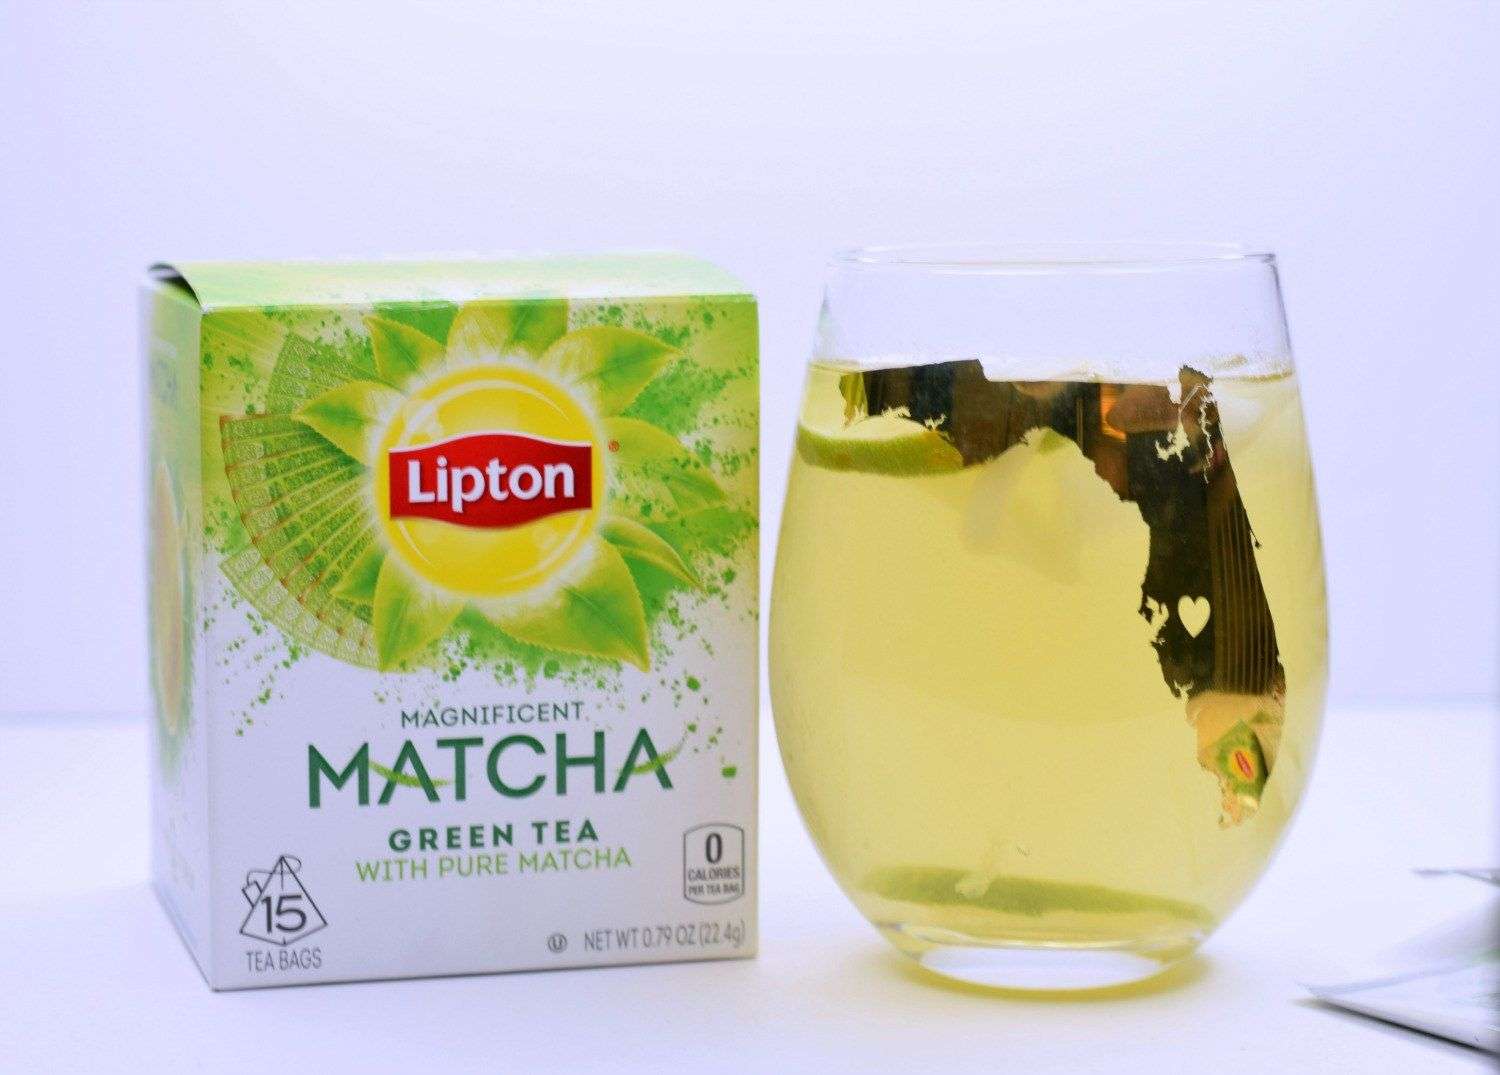 Lipton Matcha Green Tea Latte